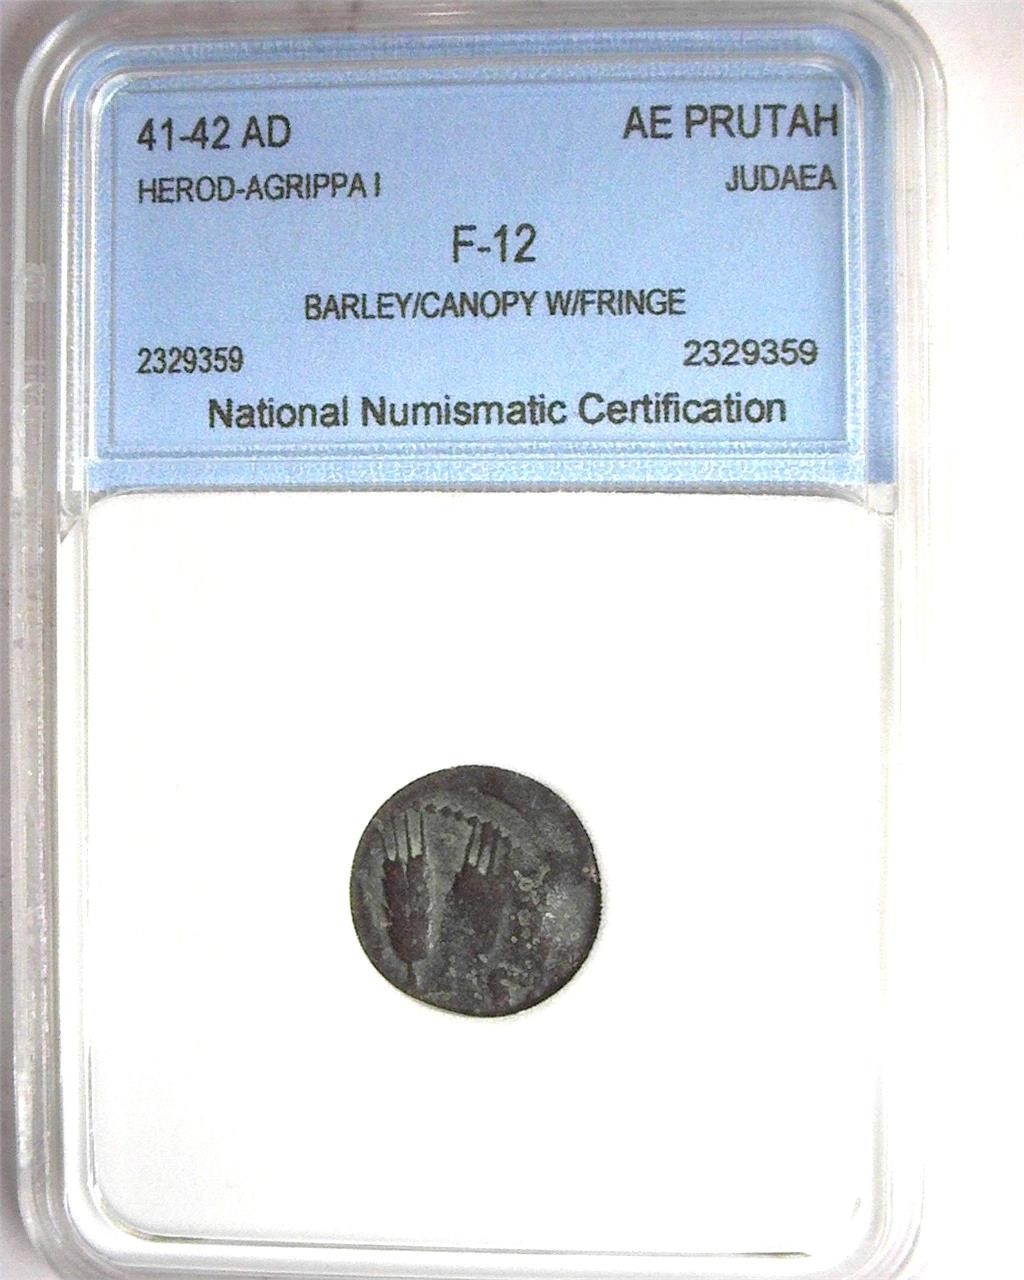 41-42 AD Judea Herod-Agrippa NNC F12 AR Prutah